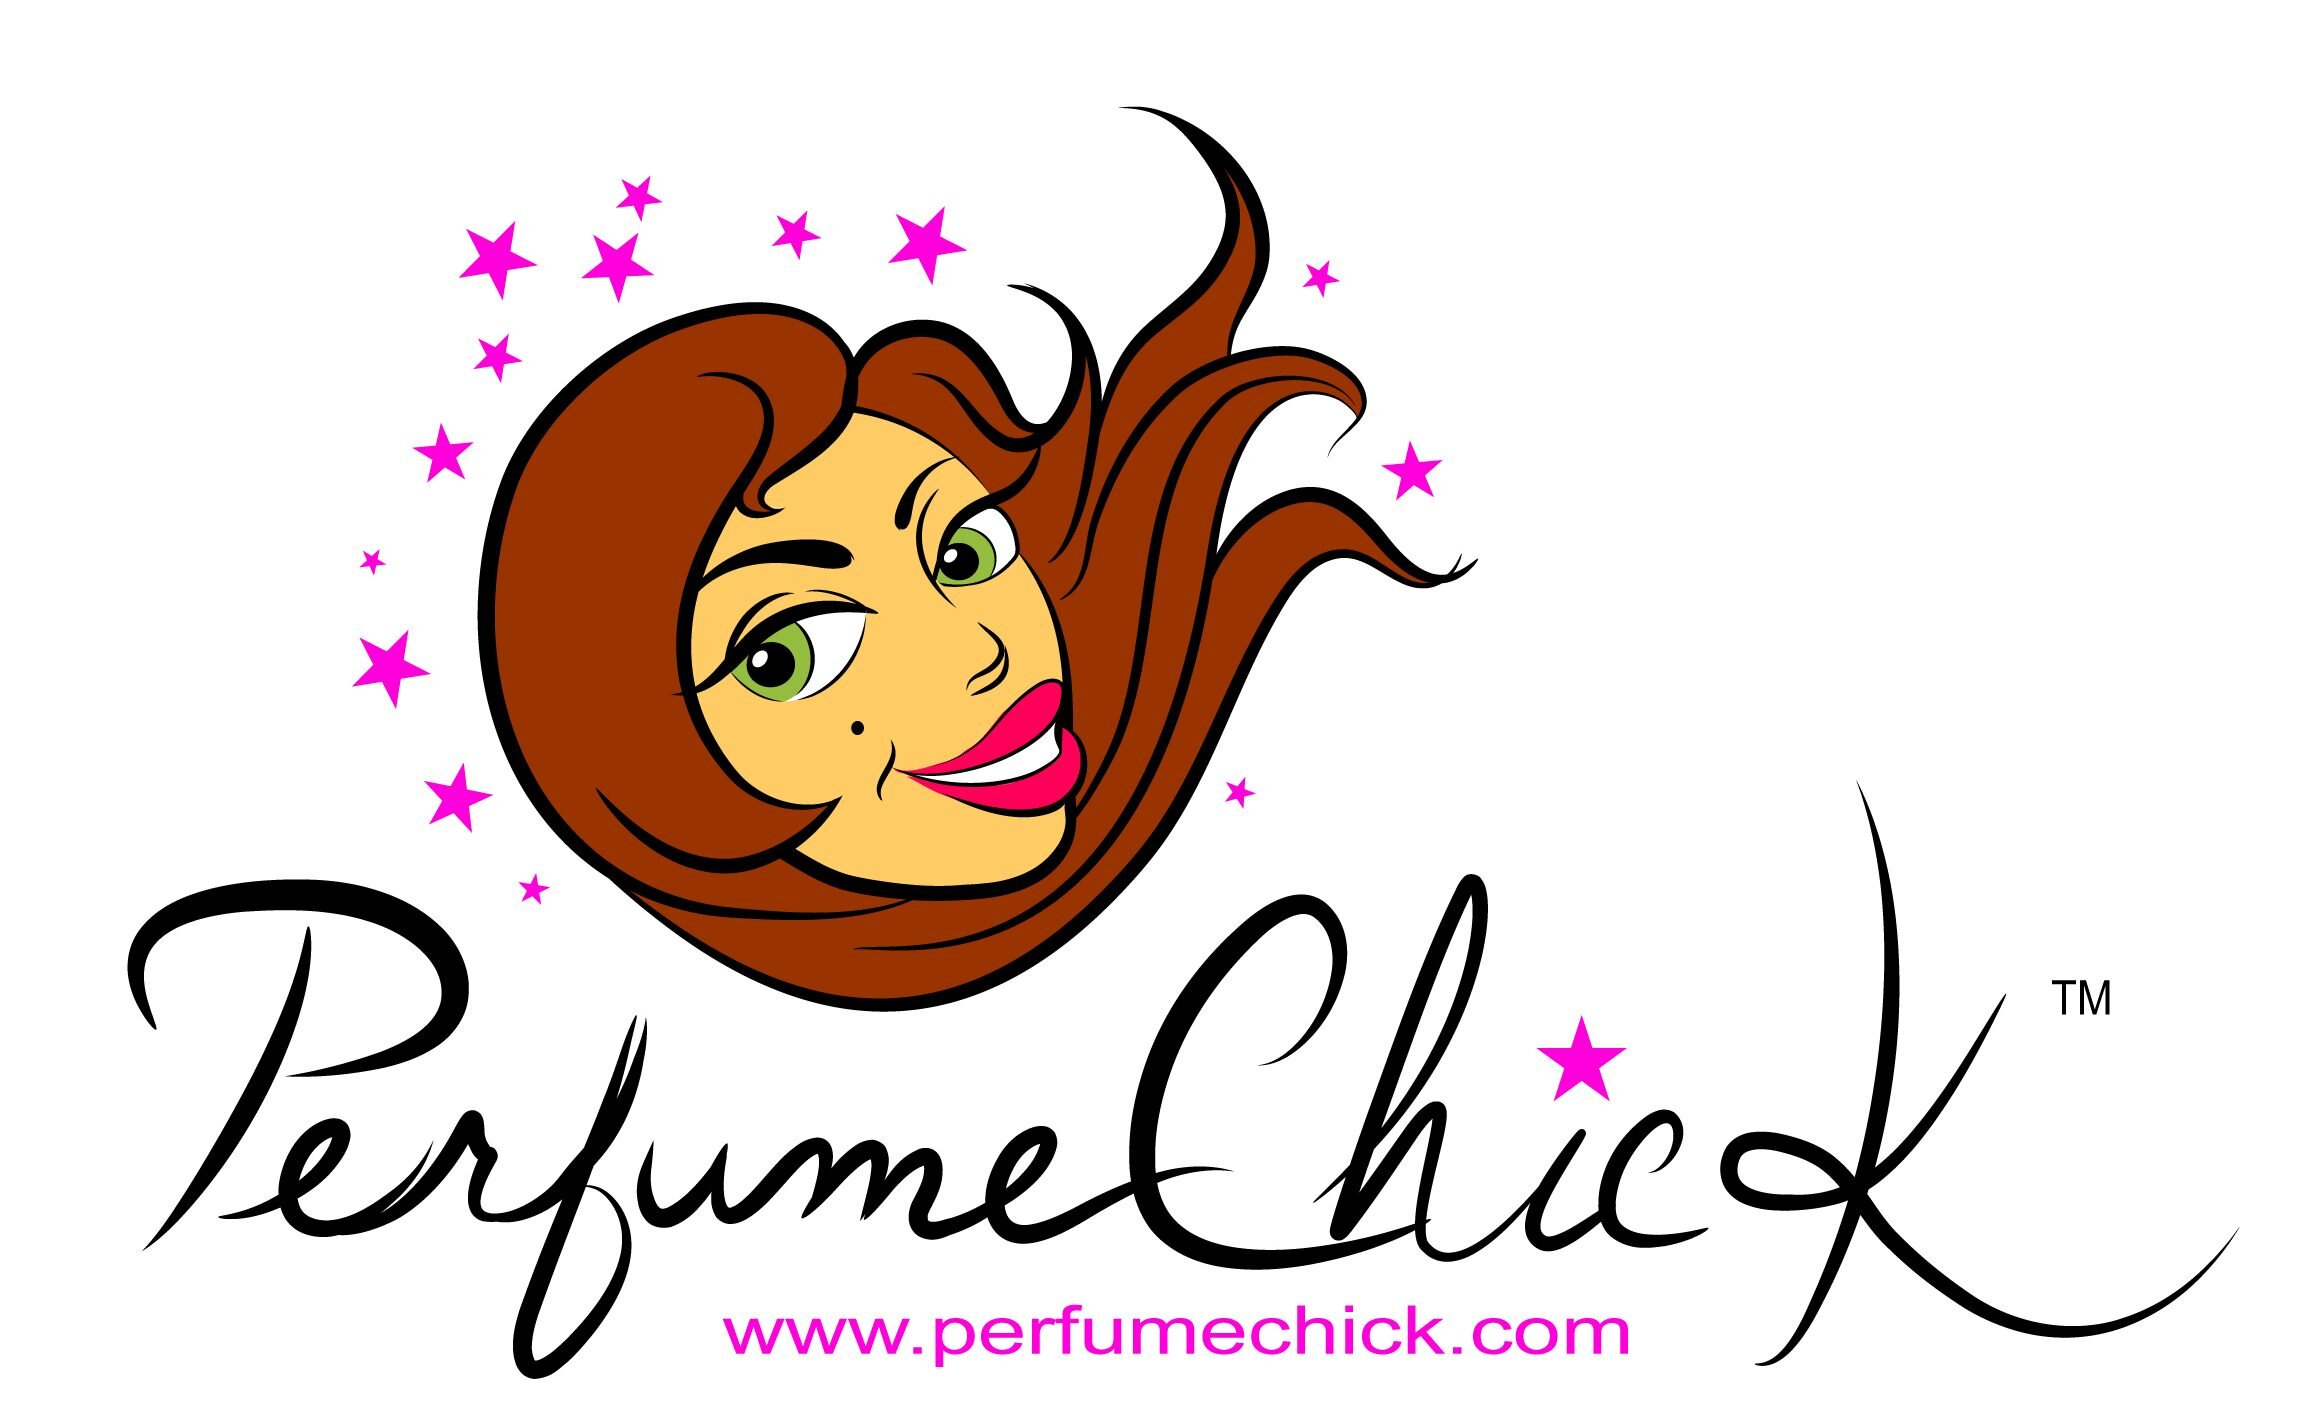 Perfume Chick